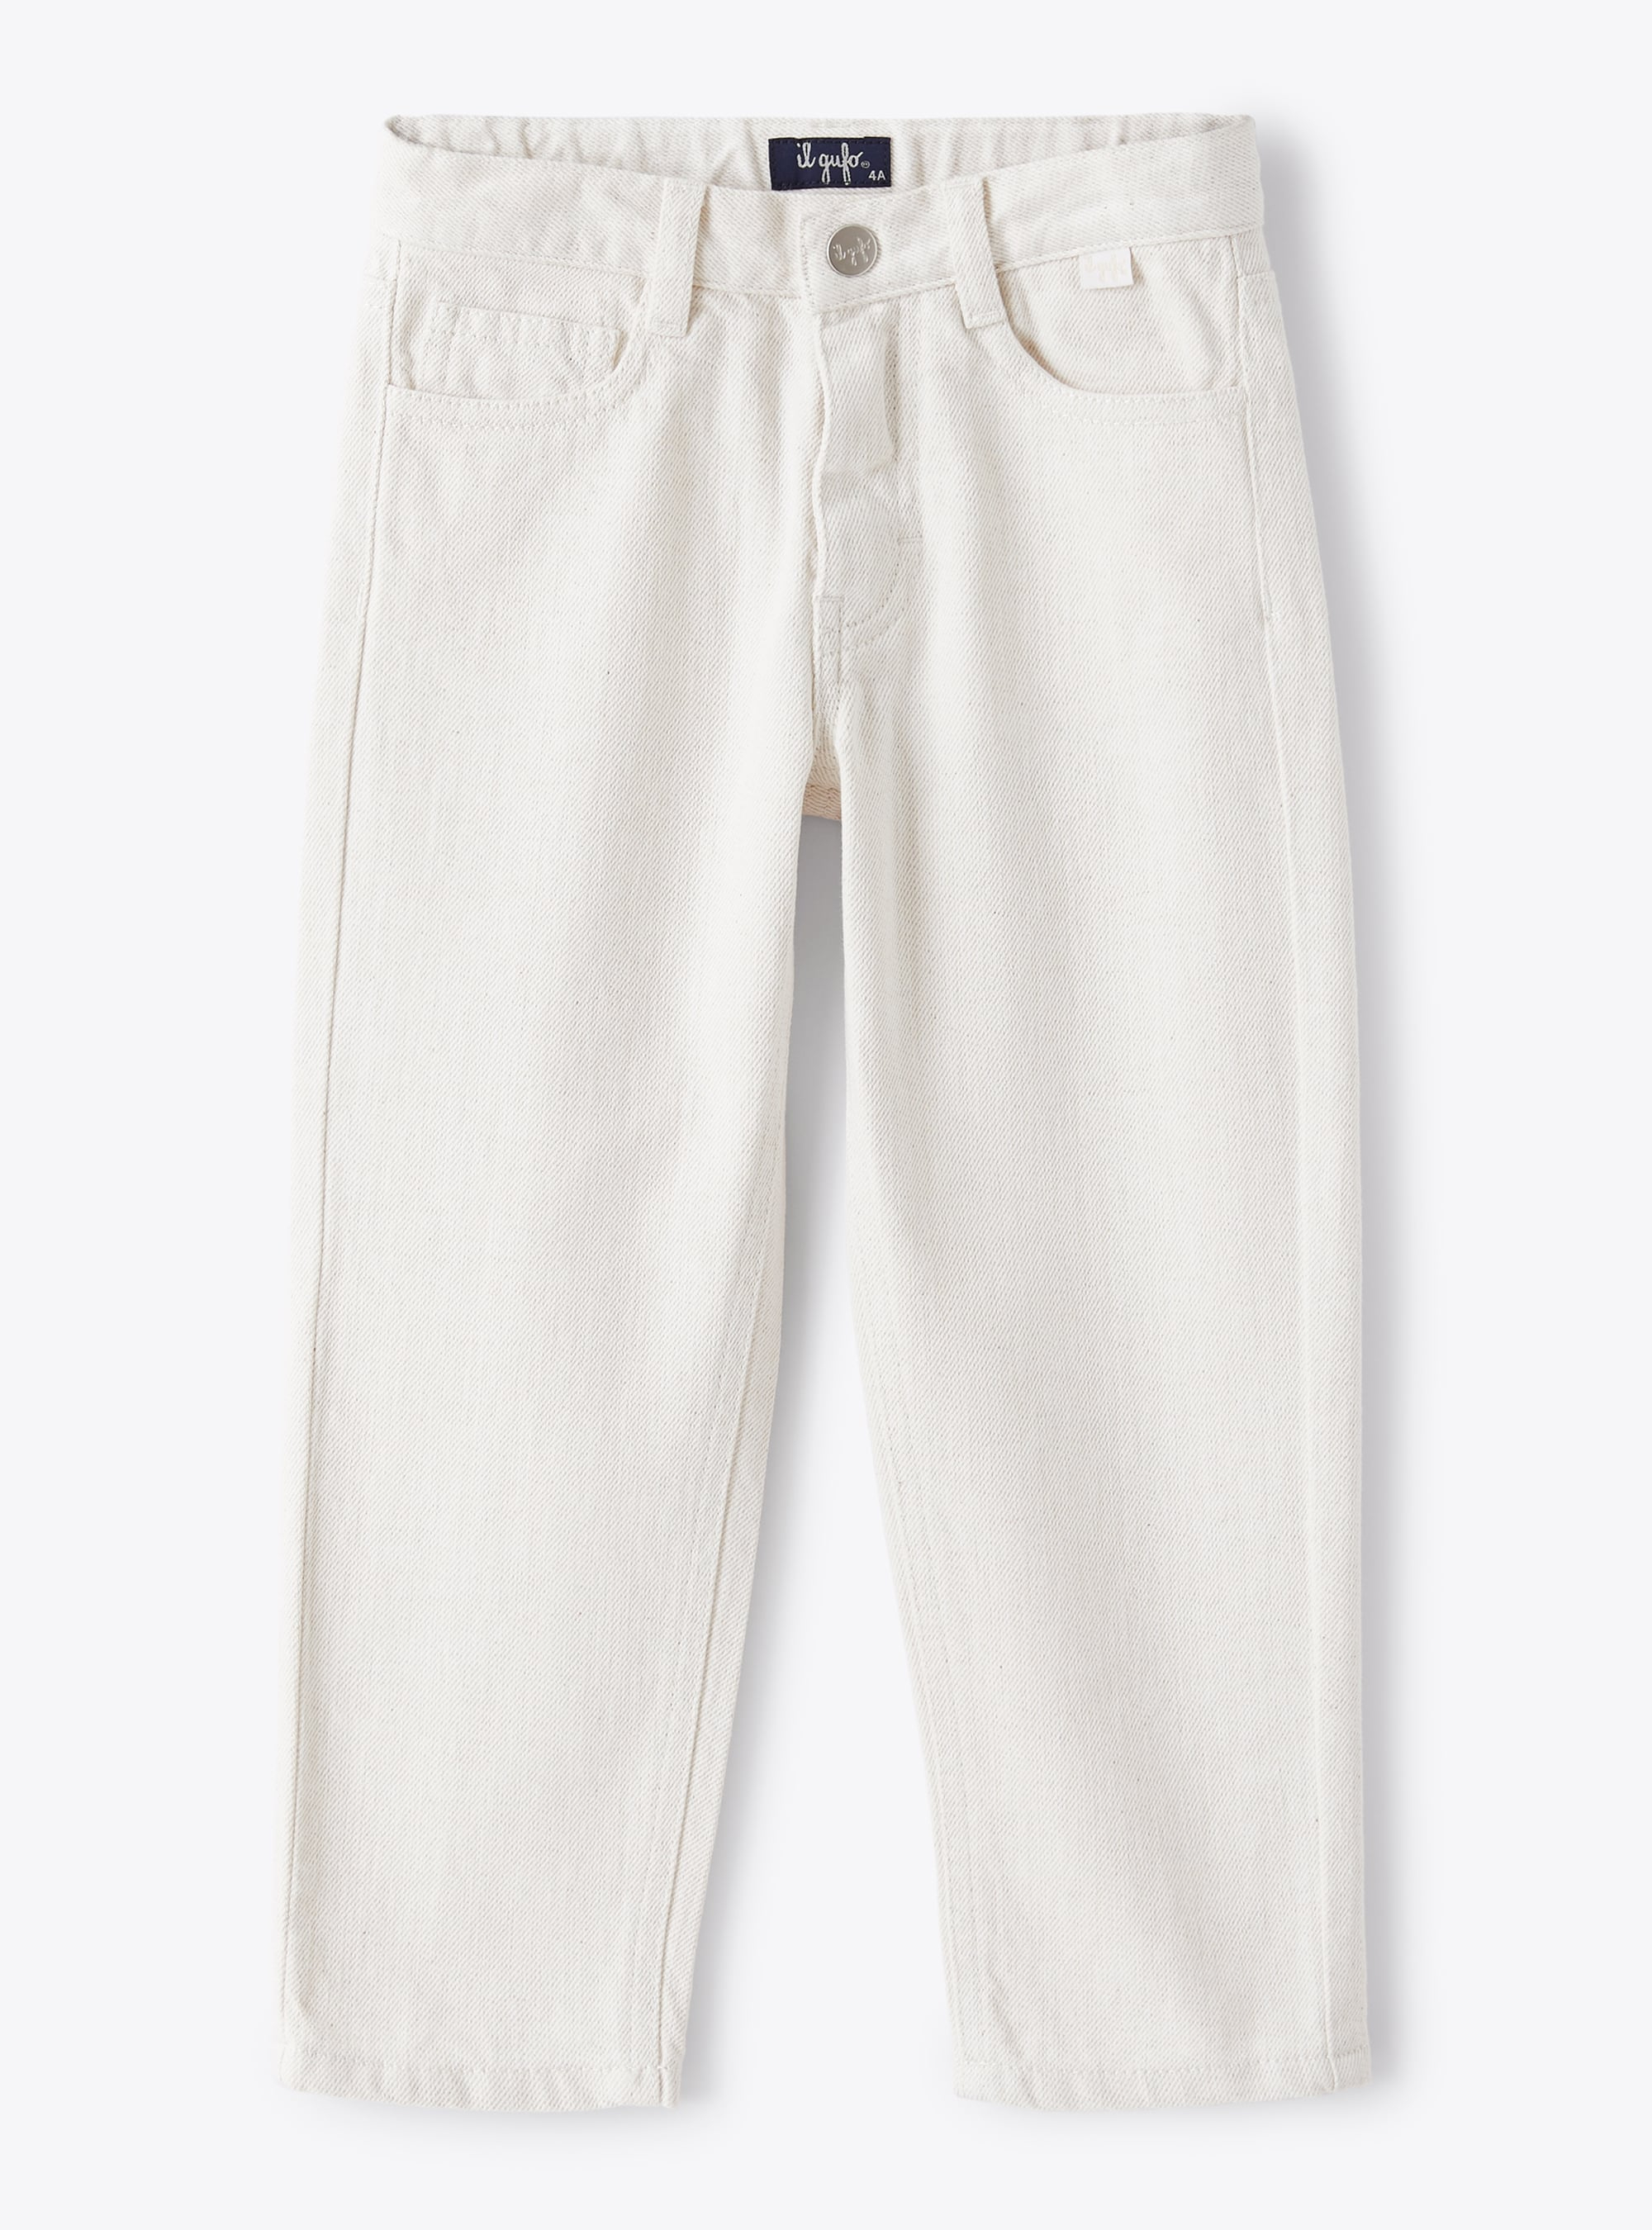 Белые брюки из саржи на основе хлопка и льна - Брюки - Il Gufo